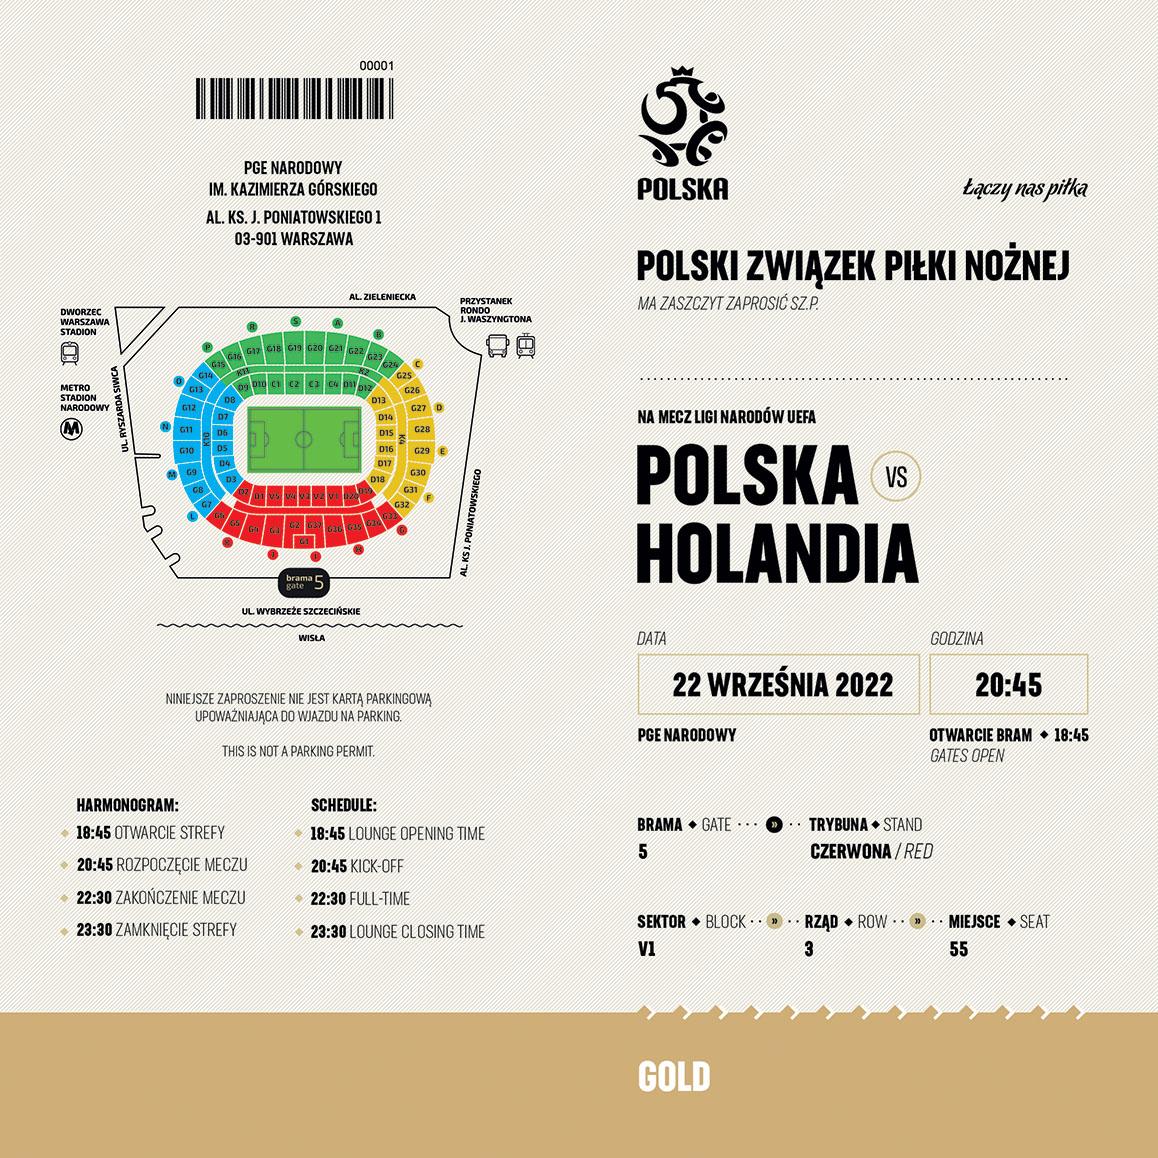 Zaproszenie na mecz Polska - Holandia 0:2 (22.09.2022)